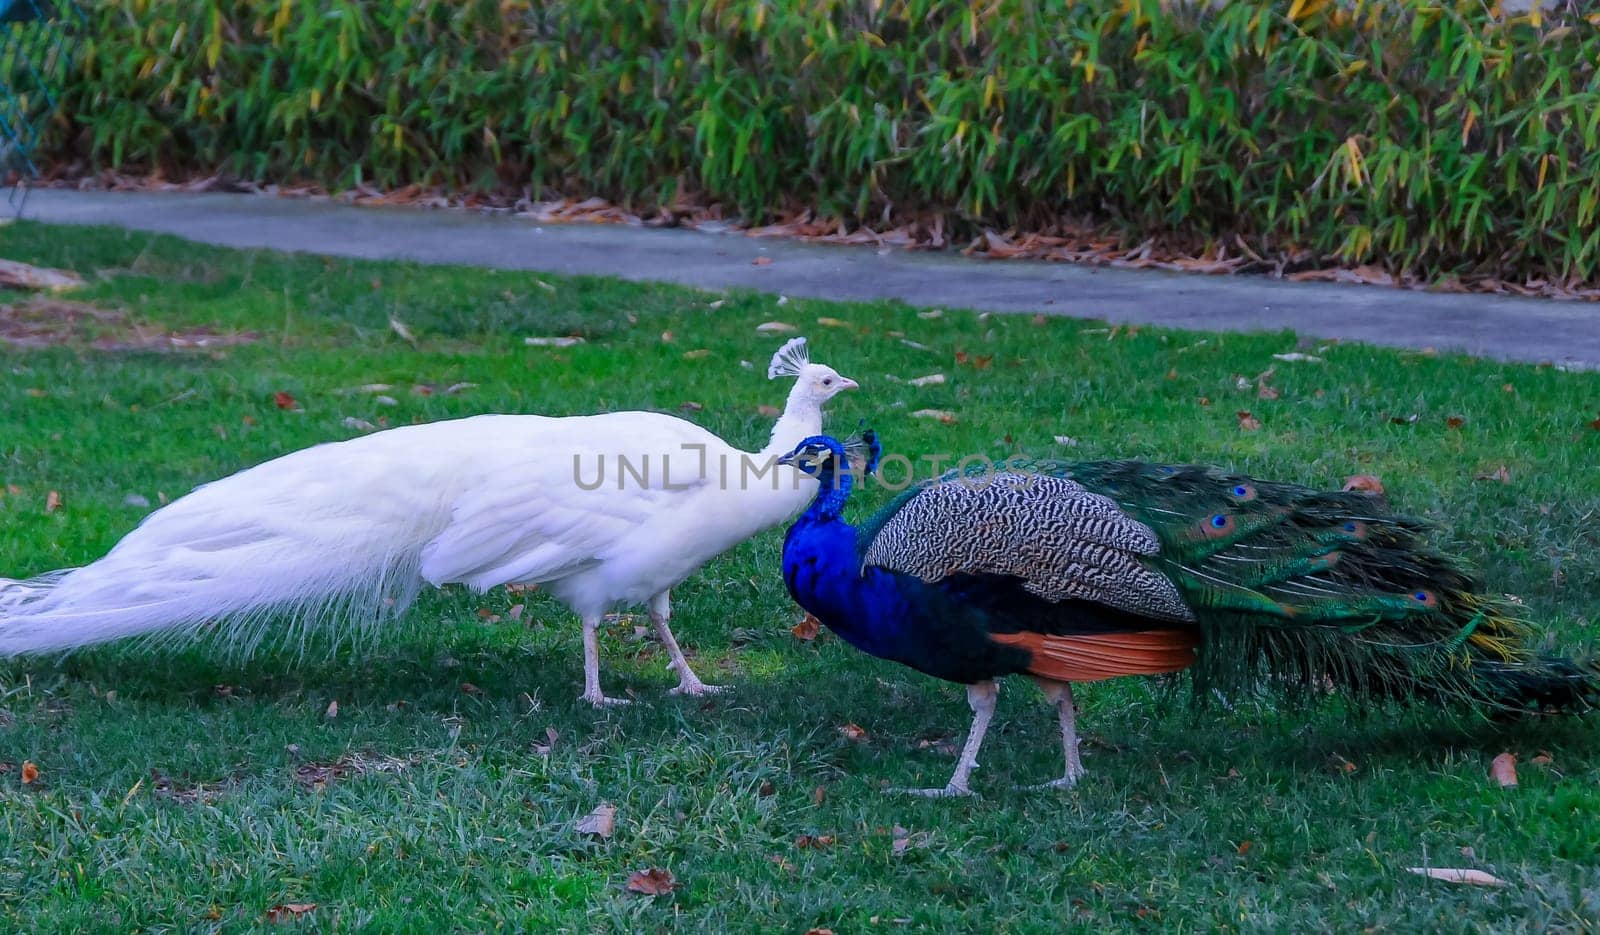 A tame albino peacock and a normal peacock stroll through the grass in a park